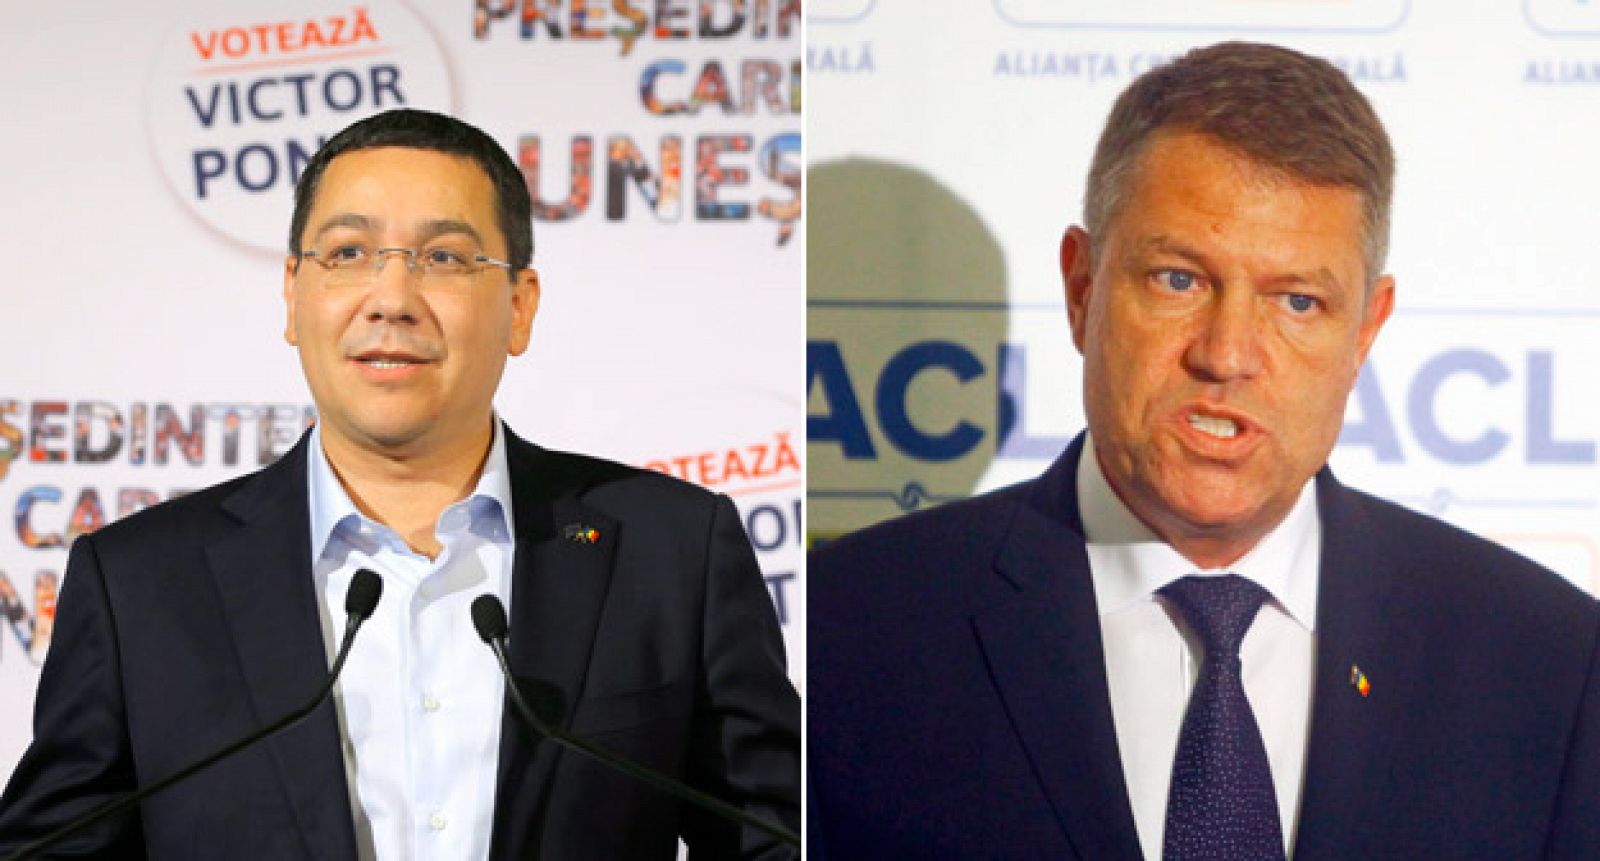 l primer ministro rumano Víctor Ponta (izq.) se enfrentará en segunda vuelta al candidato liberal Klaus Iohannis (dcha.).